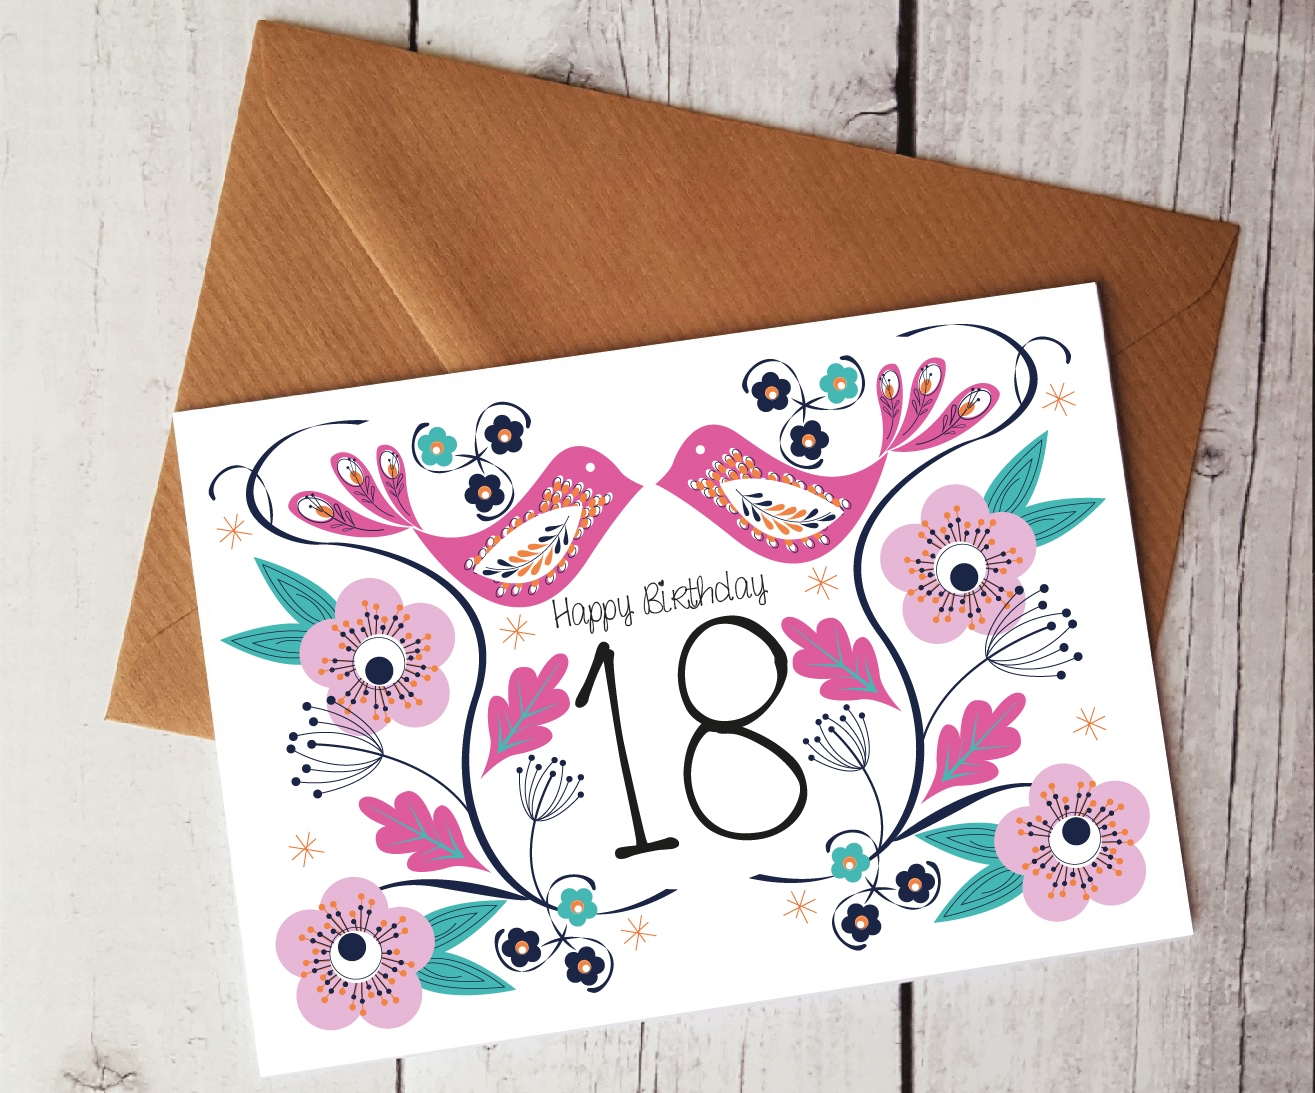 Cute Ideas For Birthday Cards 18th Birthday Card